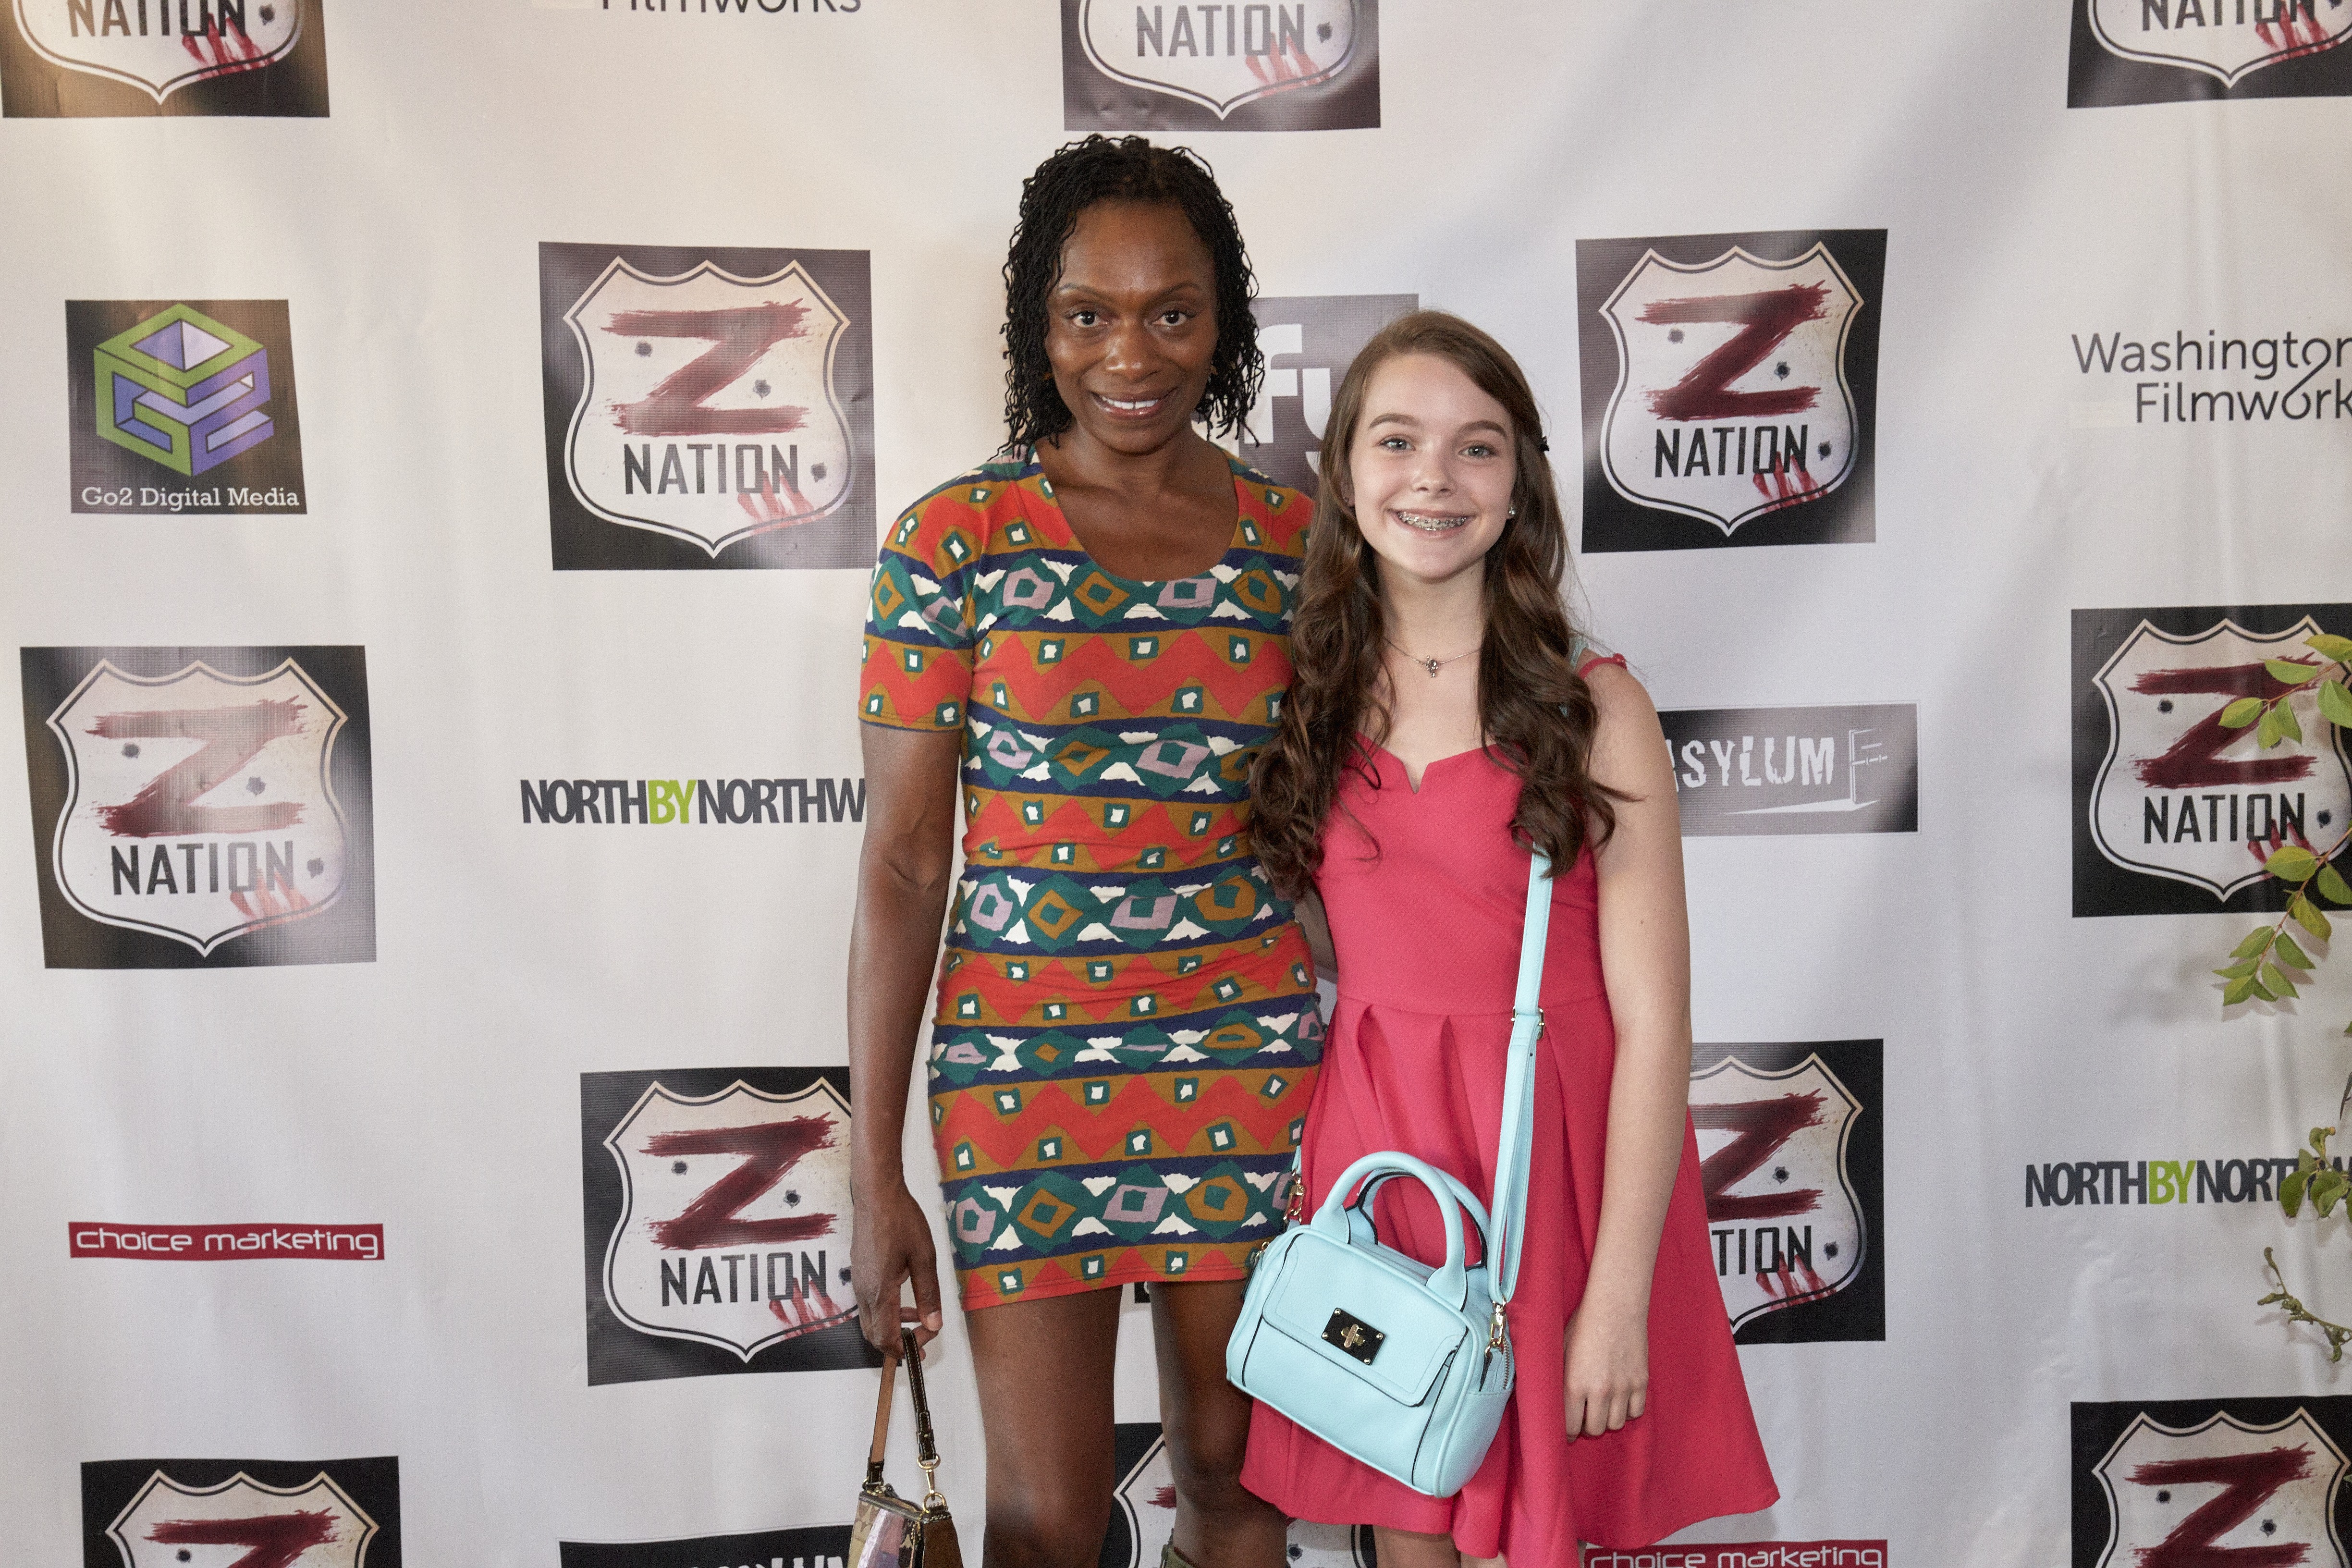 Nike Imoru, Caroline Slater Z-Nation season 2 premiere party